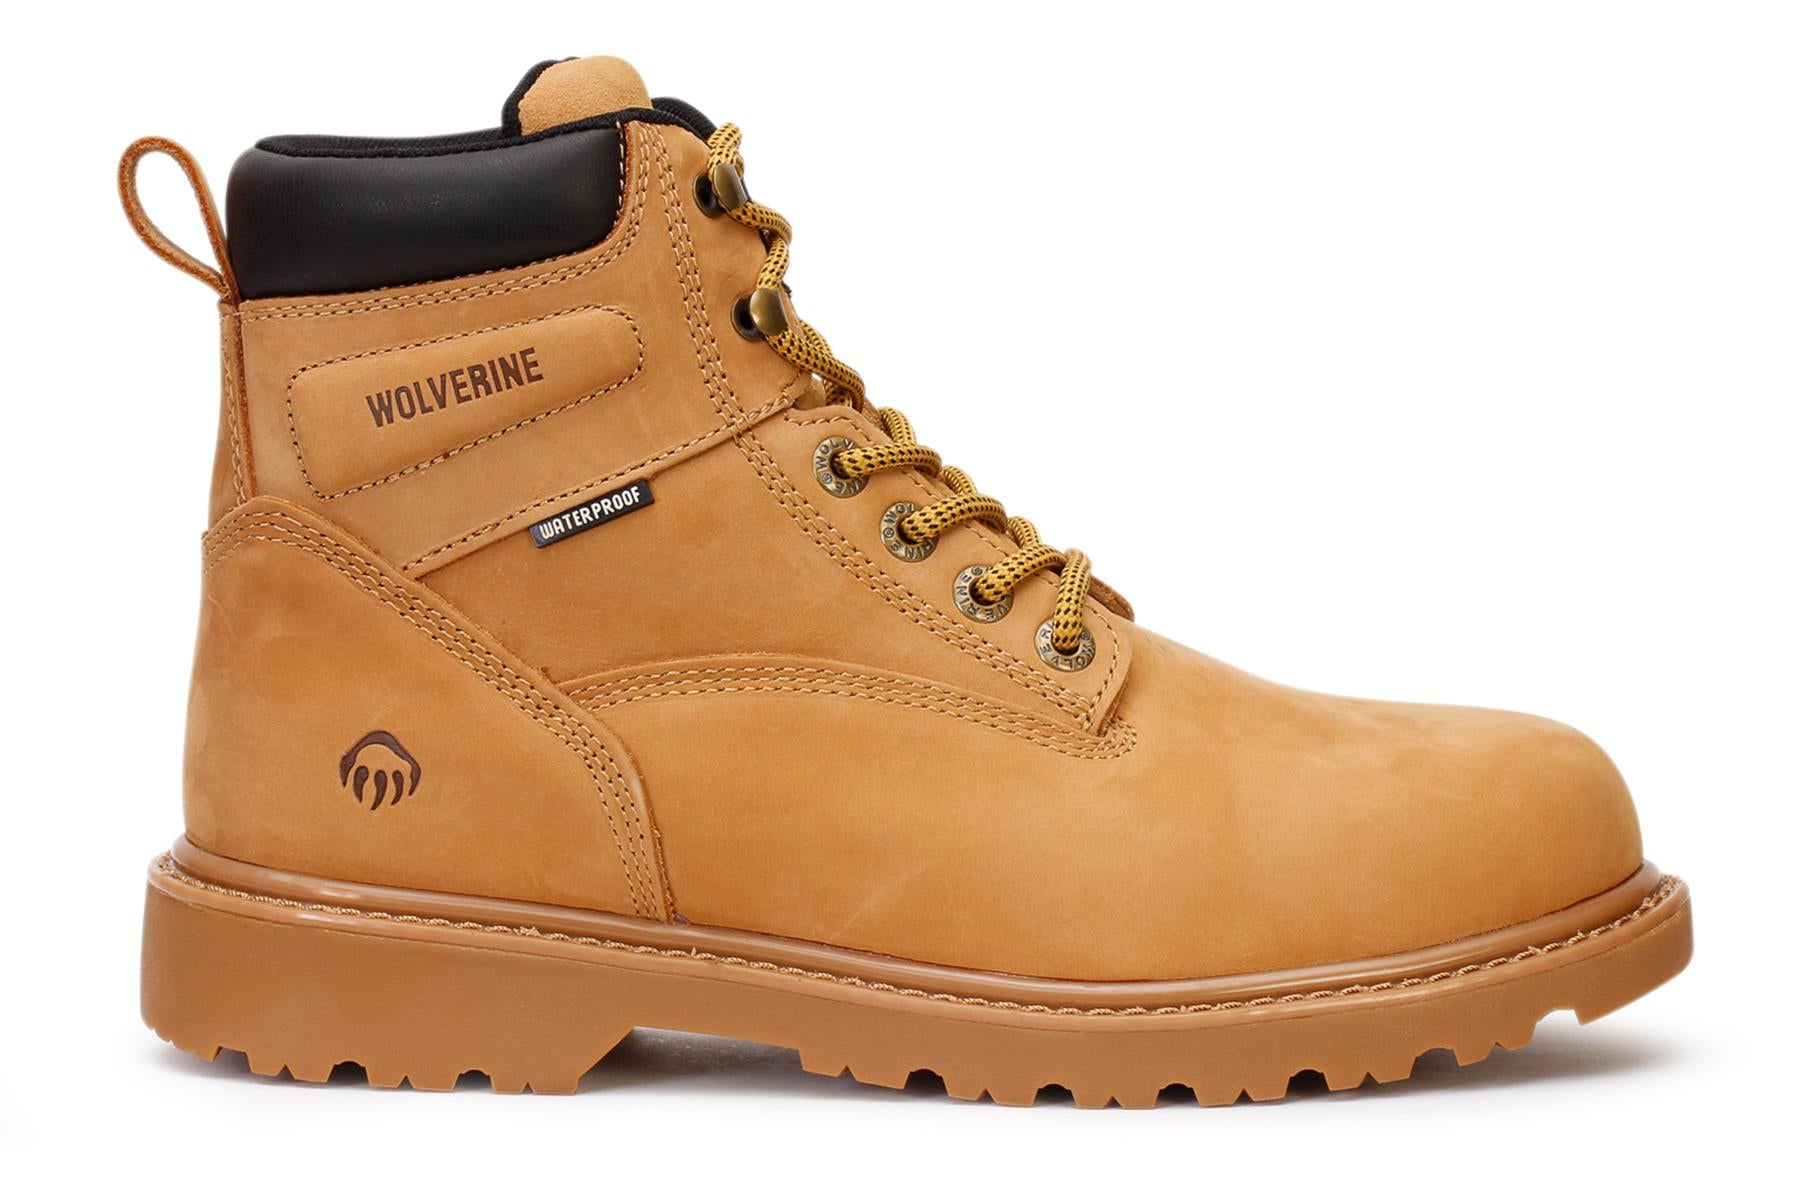 wolverine-mens-6-work-soft-toe-waterproof-boots-floorhand-wheat-w10642-main